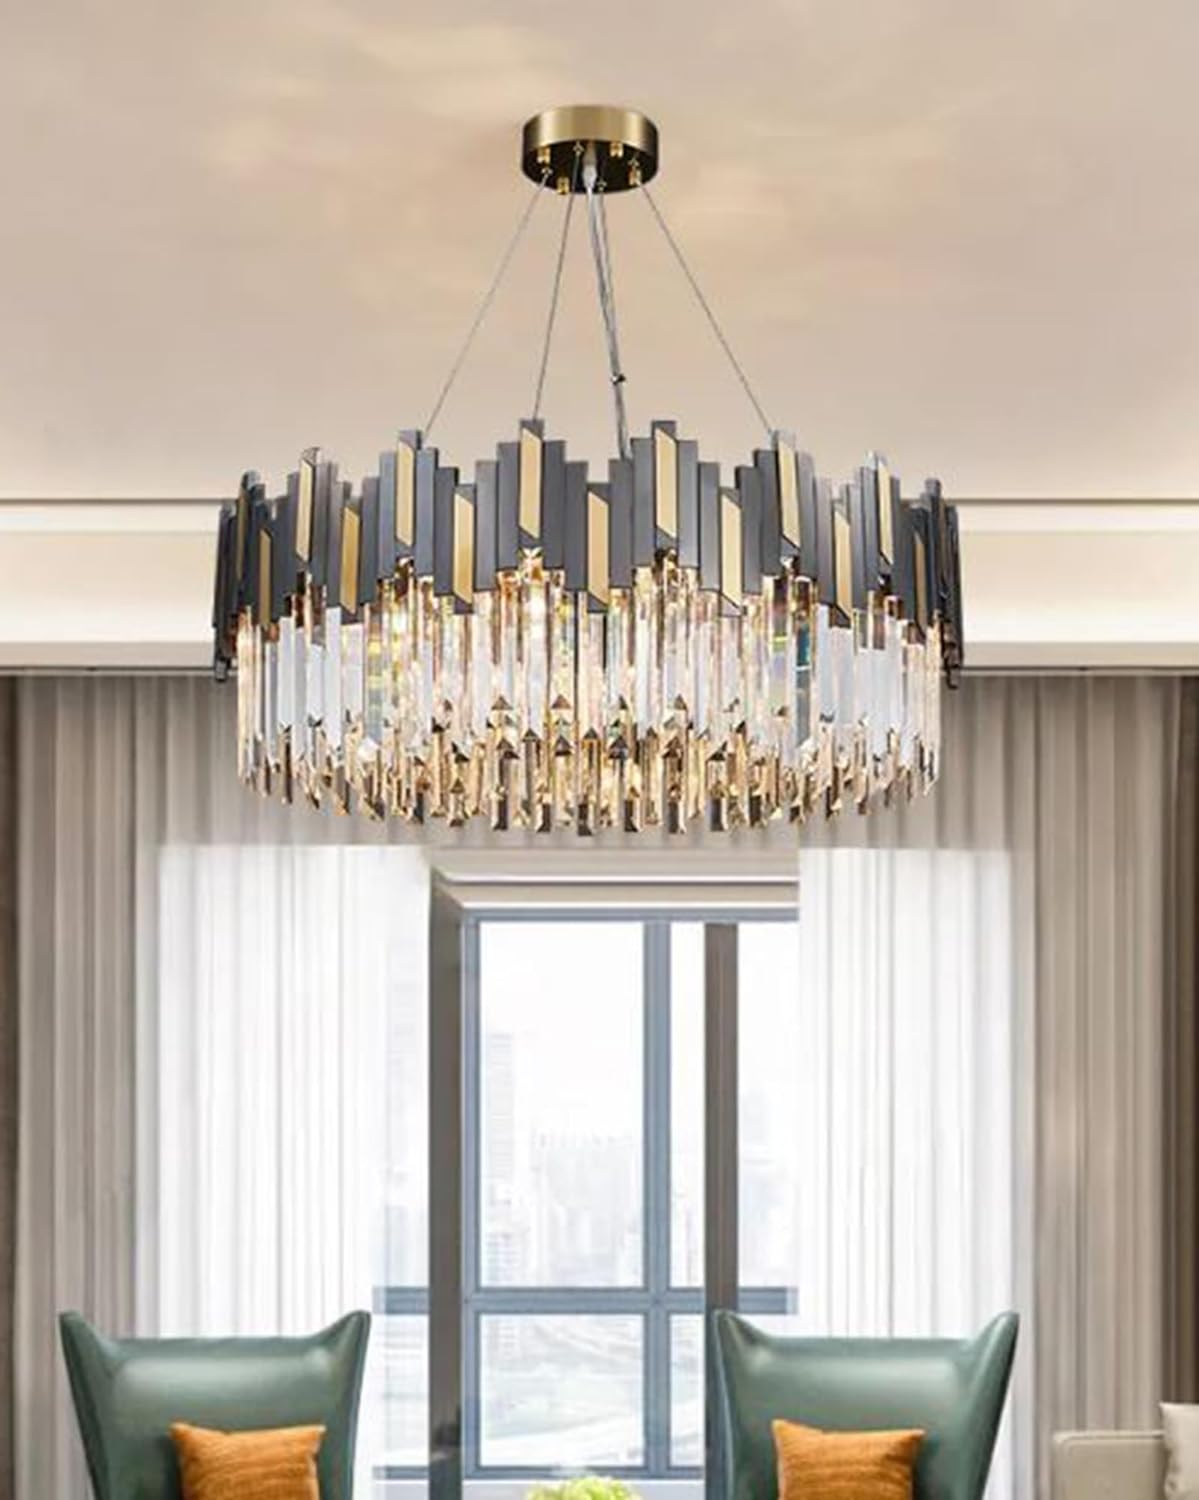 15.7"5 Lights Pendant Light Fixture Crystal Chandelier for Foyer Dining Room, Vintage Ceiling Lighting